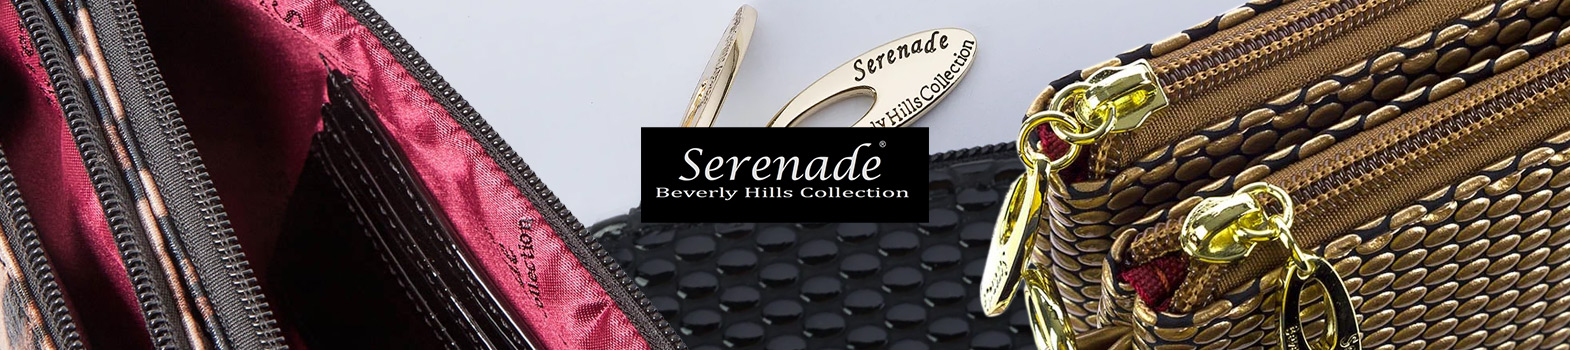 Serenade Leather